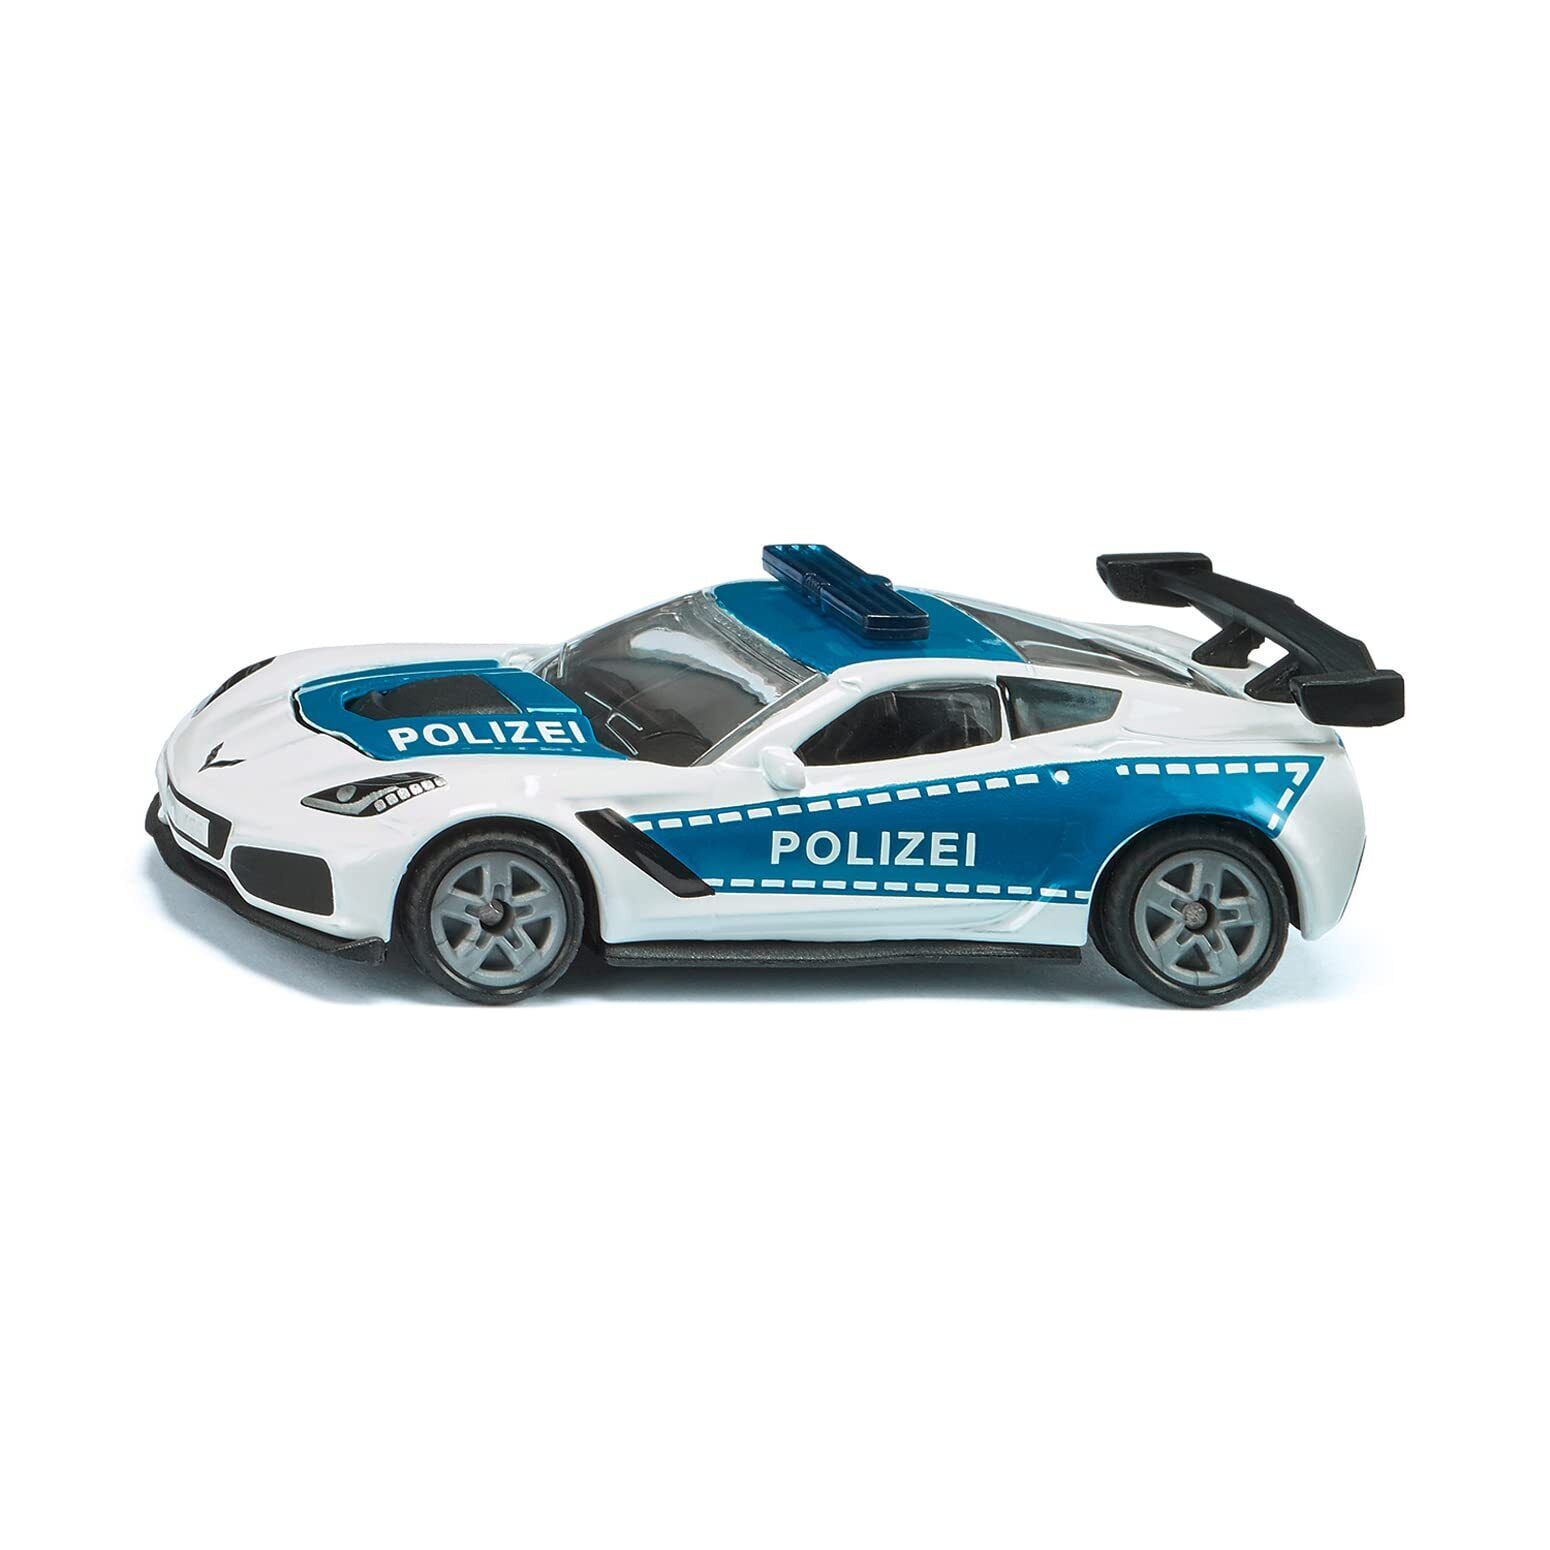 Bornelund Zik Chevrolet Corvette ZR1 Police SK1525 Unisex Collection